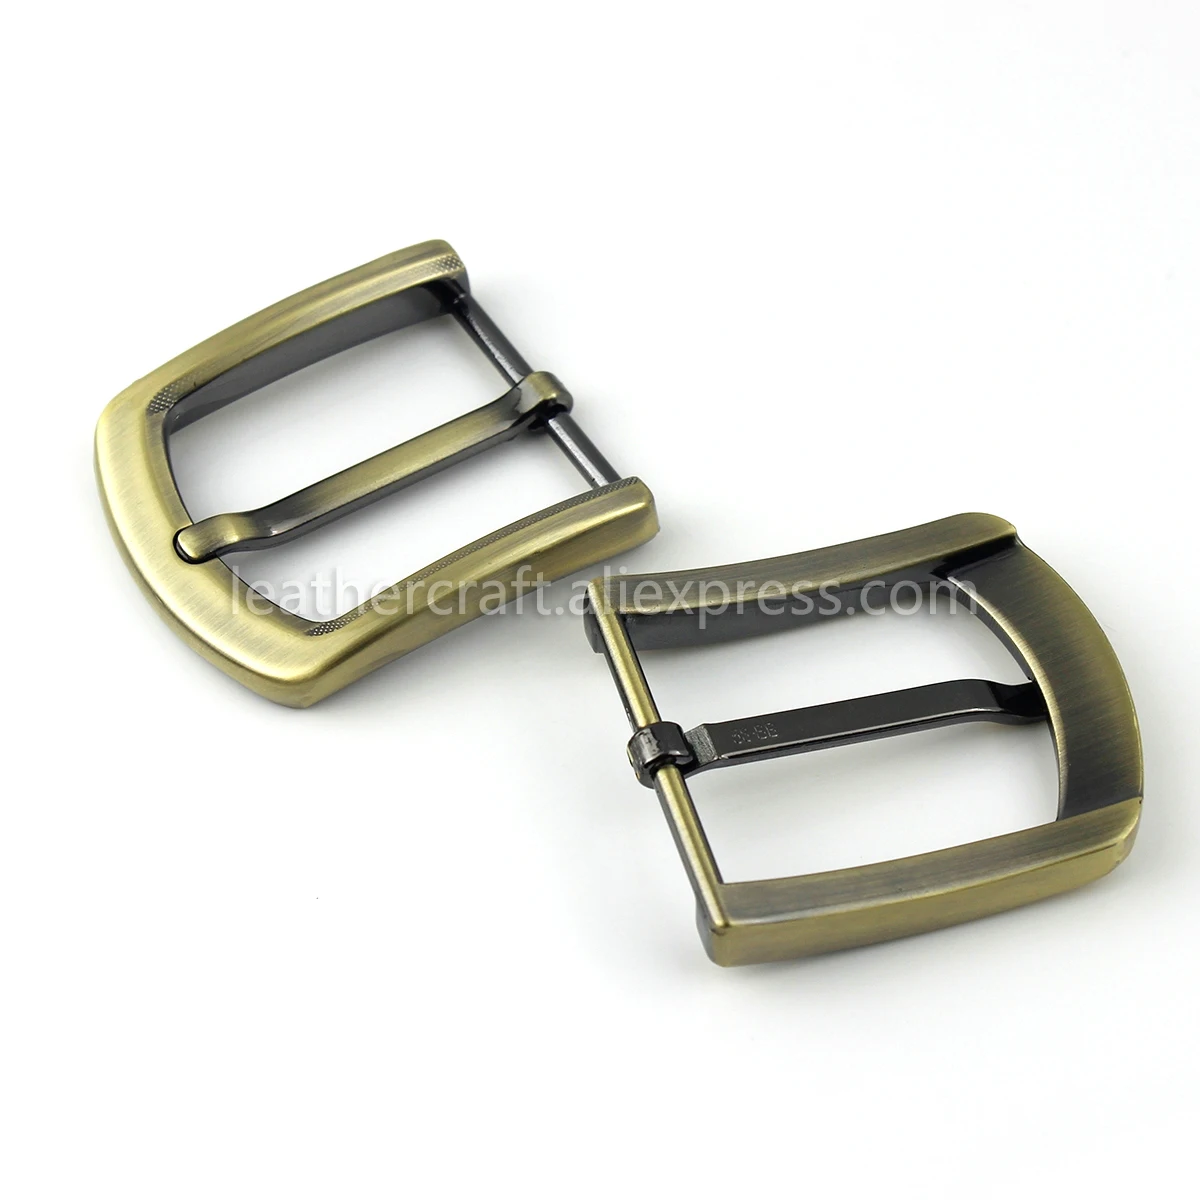 

1x 40mm Metal Brushed Belt Buckle Men End Bar Heel bar Single Pin Half Buckle Fit for 37-39mm Belt Replacement Jeans Accessories